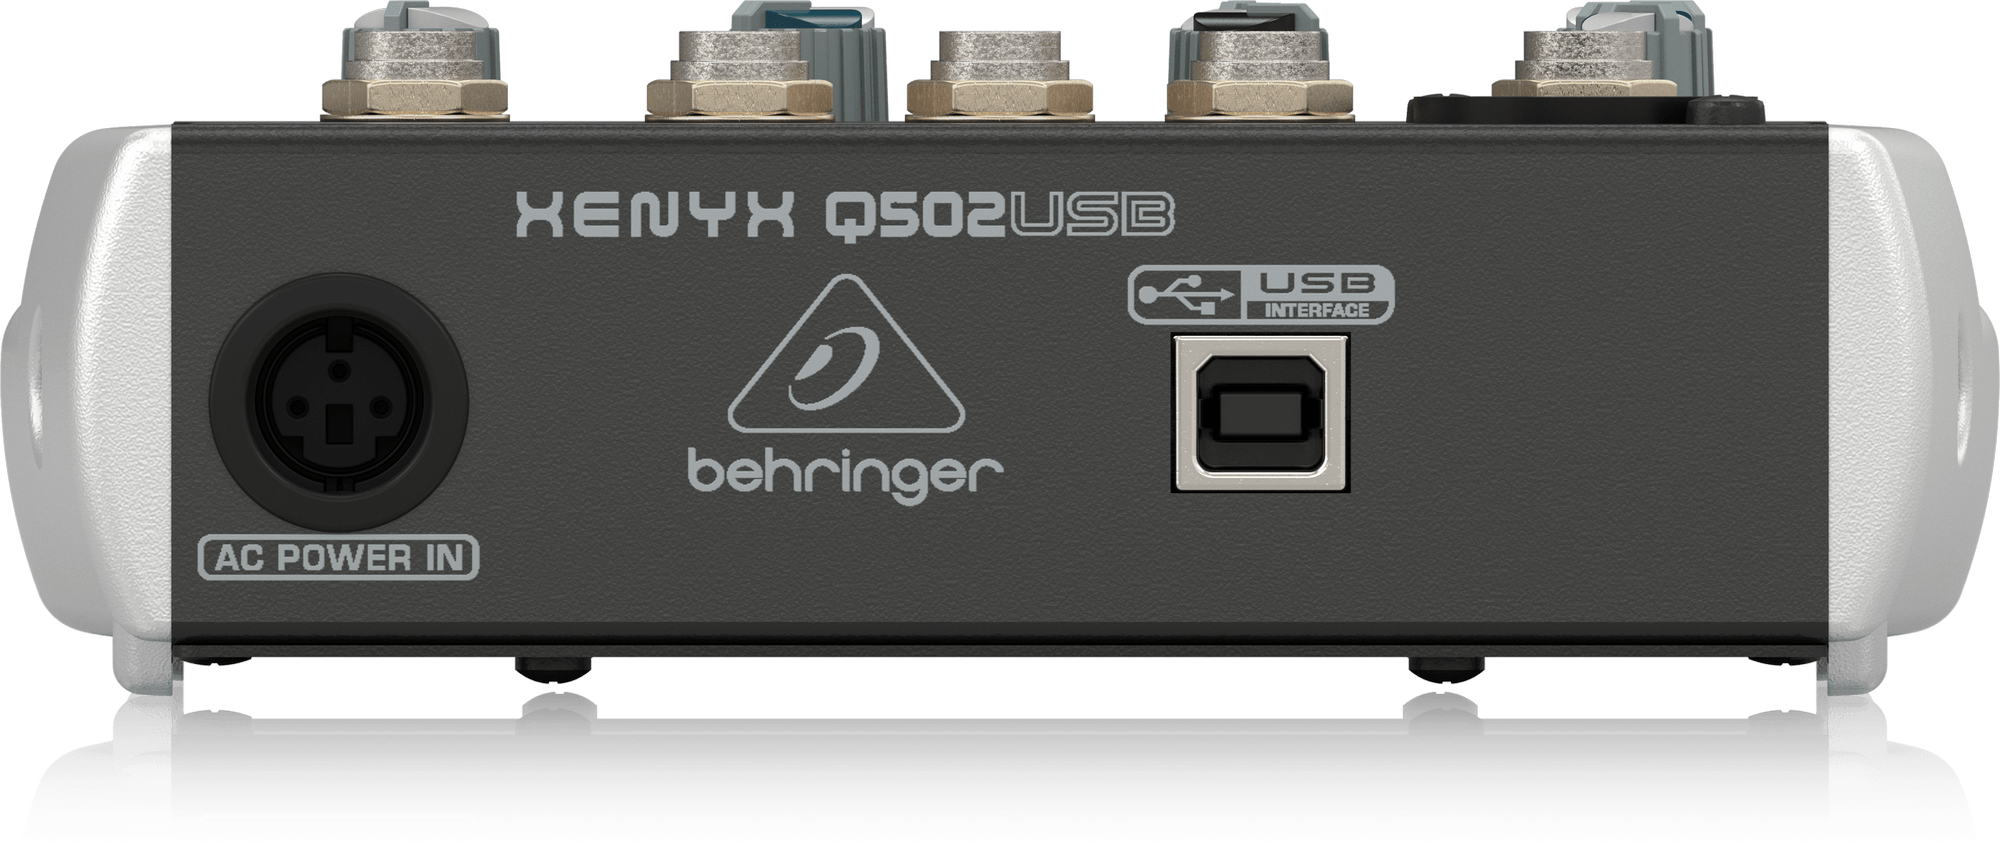 behringer xenyx q802usb power jack